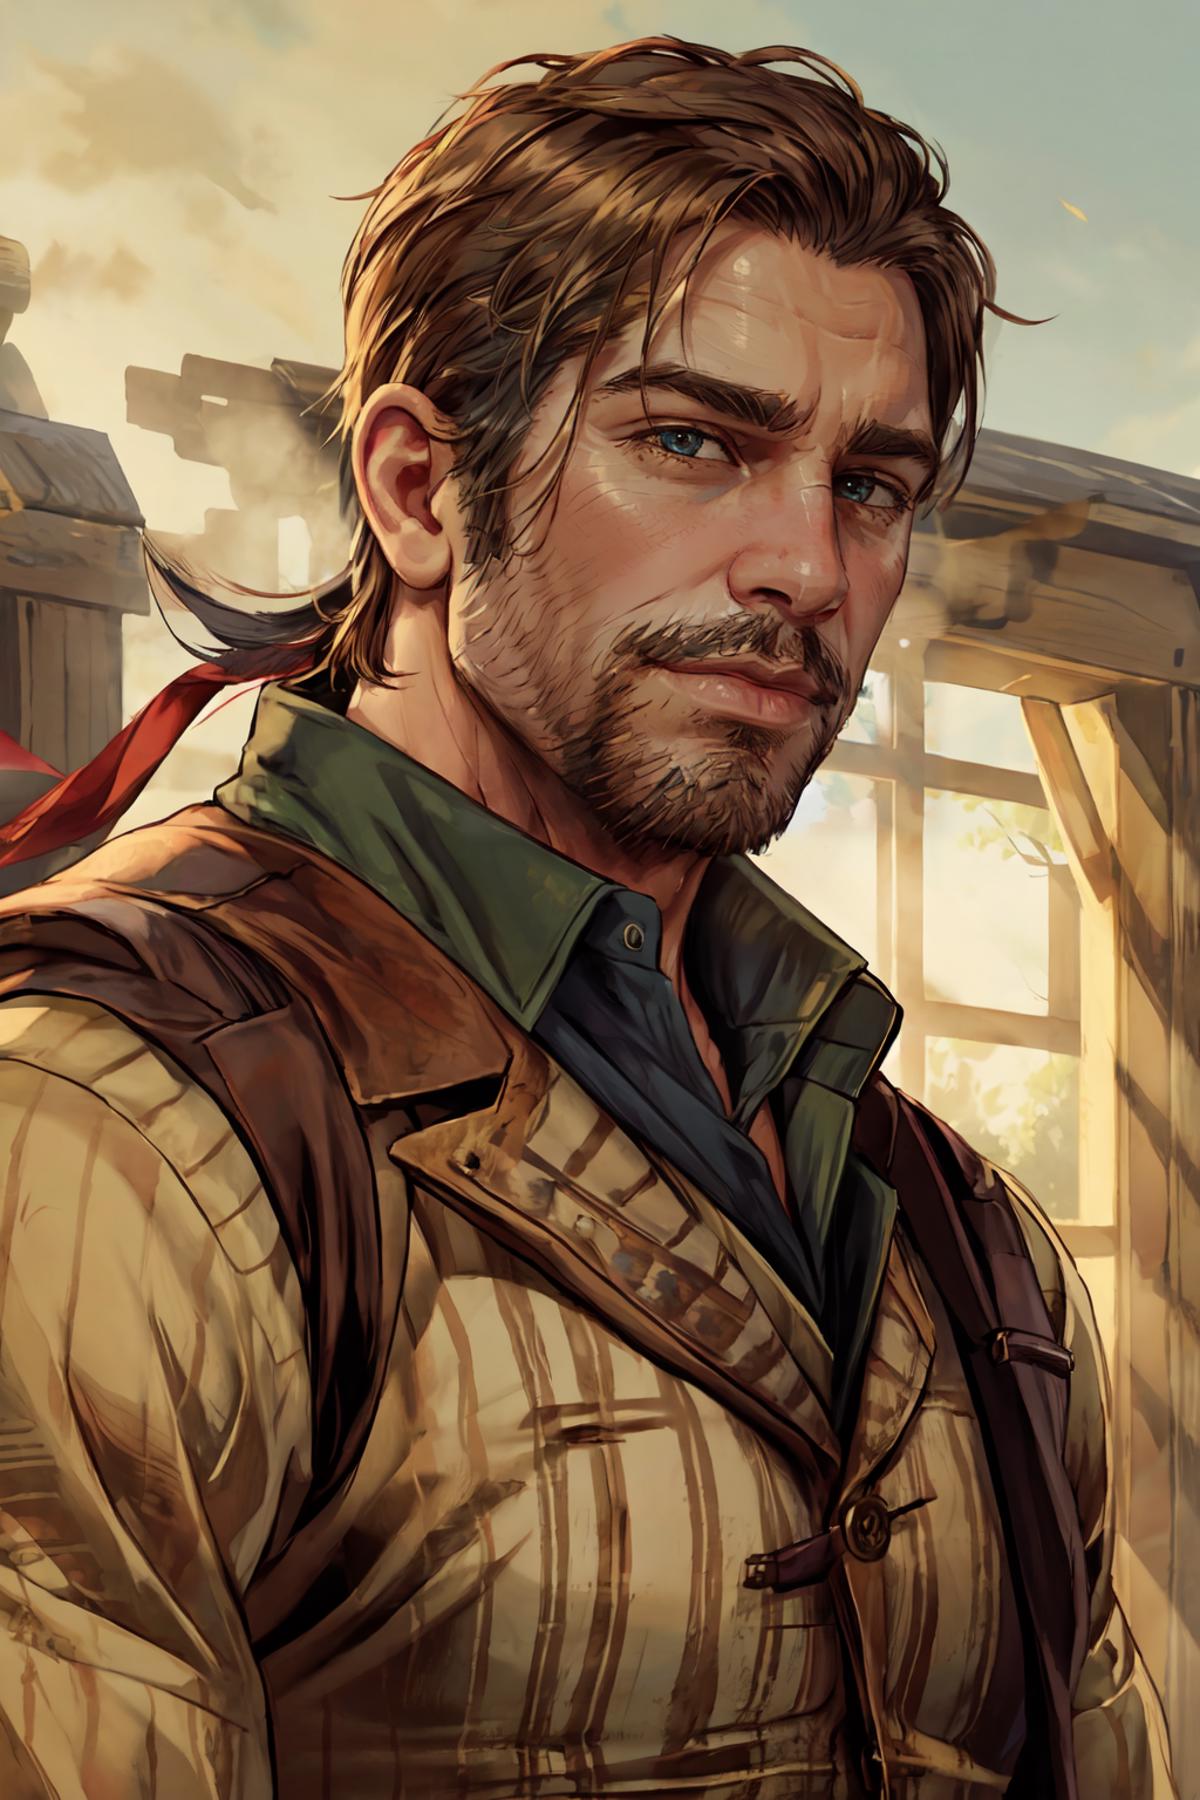 Arthur Morgan from Red Dead Redemption 2 image by SecretEGGNOG